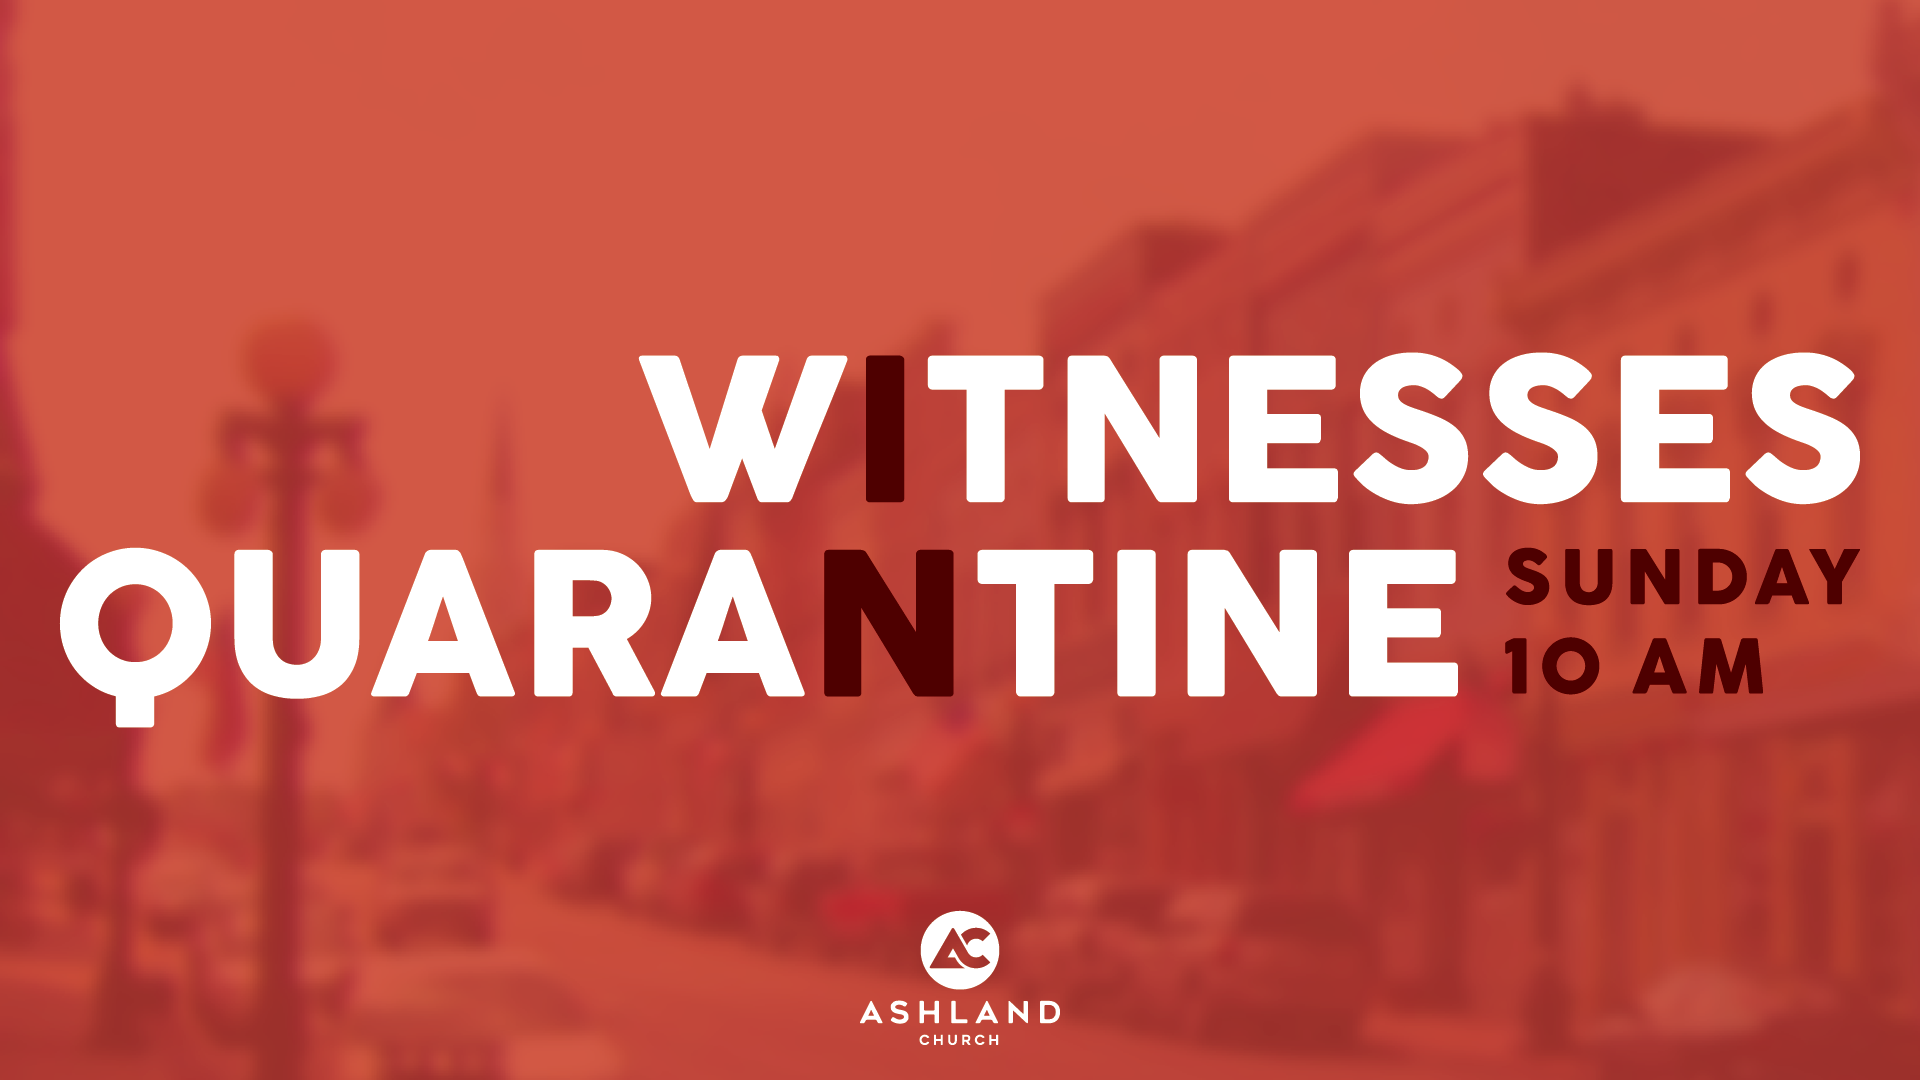 Witnesses in Quarantine (Acts 1:8)